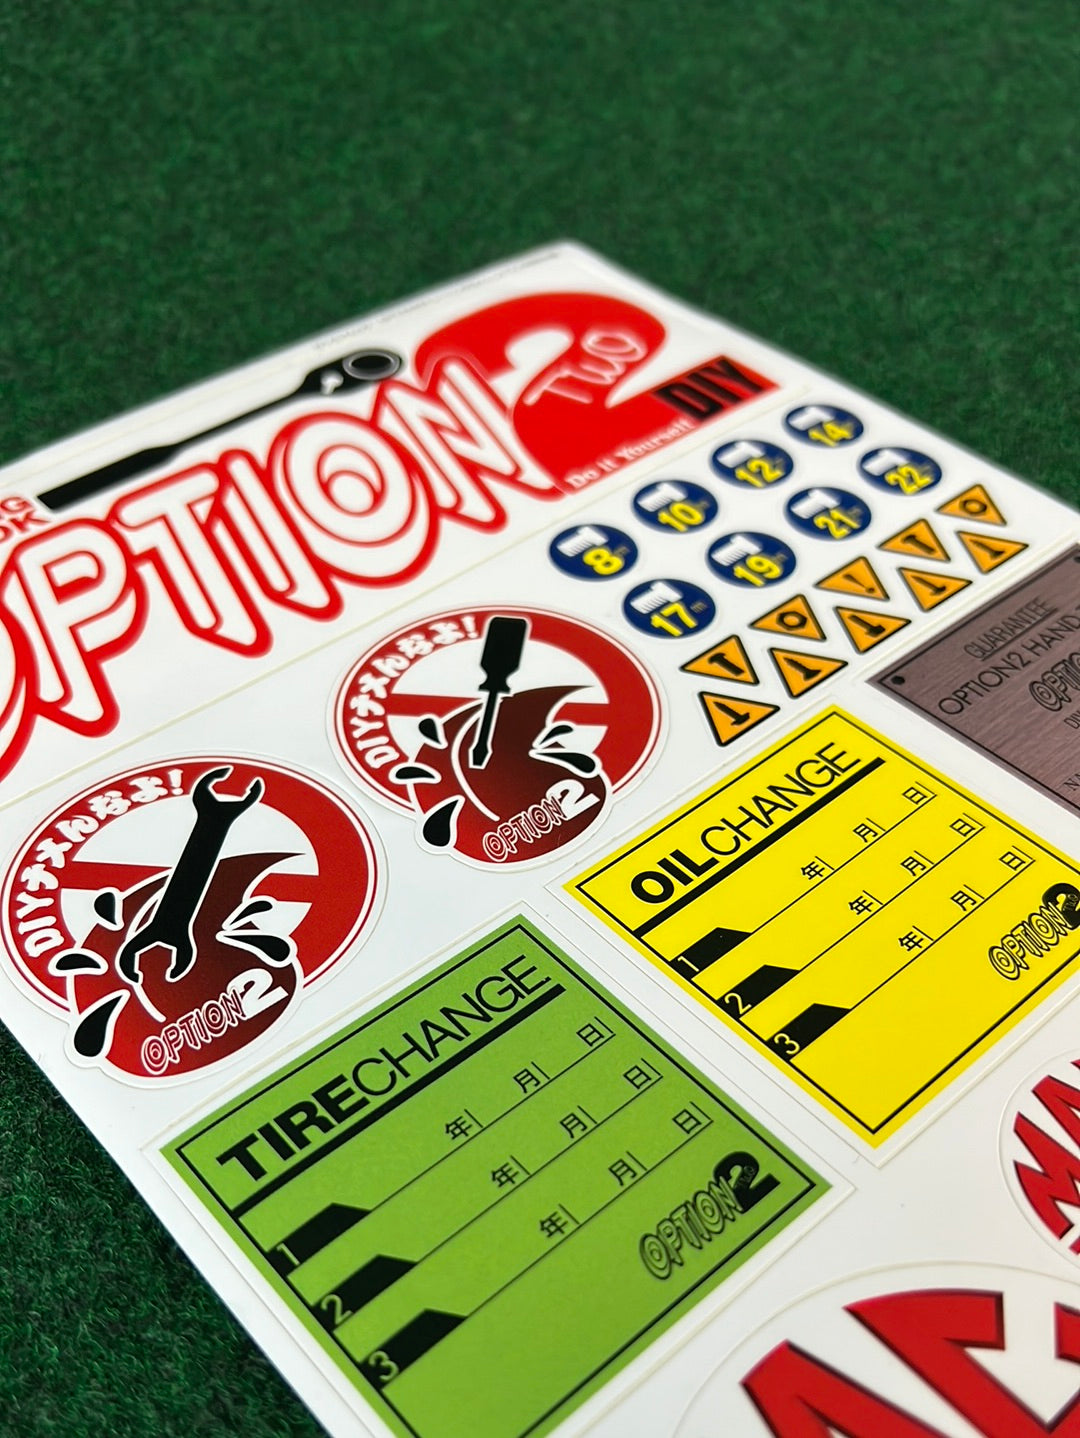 Option2 DIY (KTC & MAC Tools) Sticker Sheet